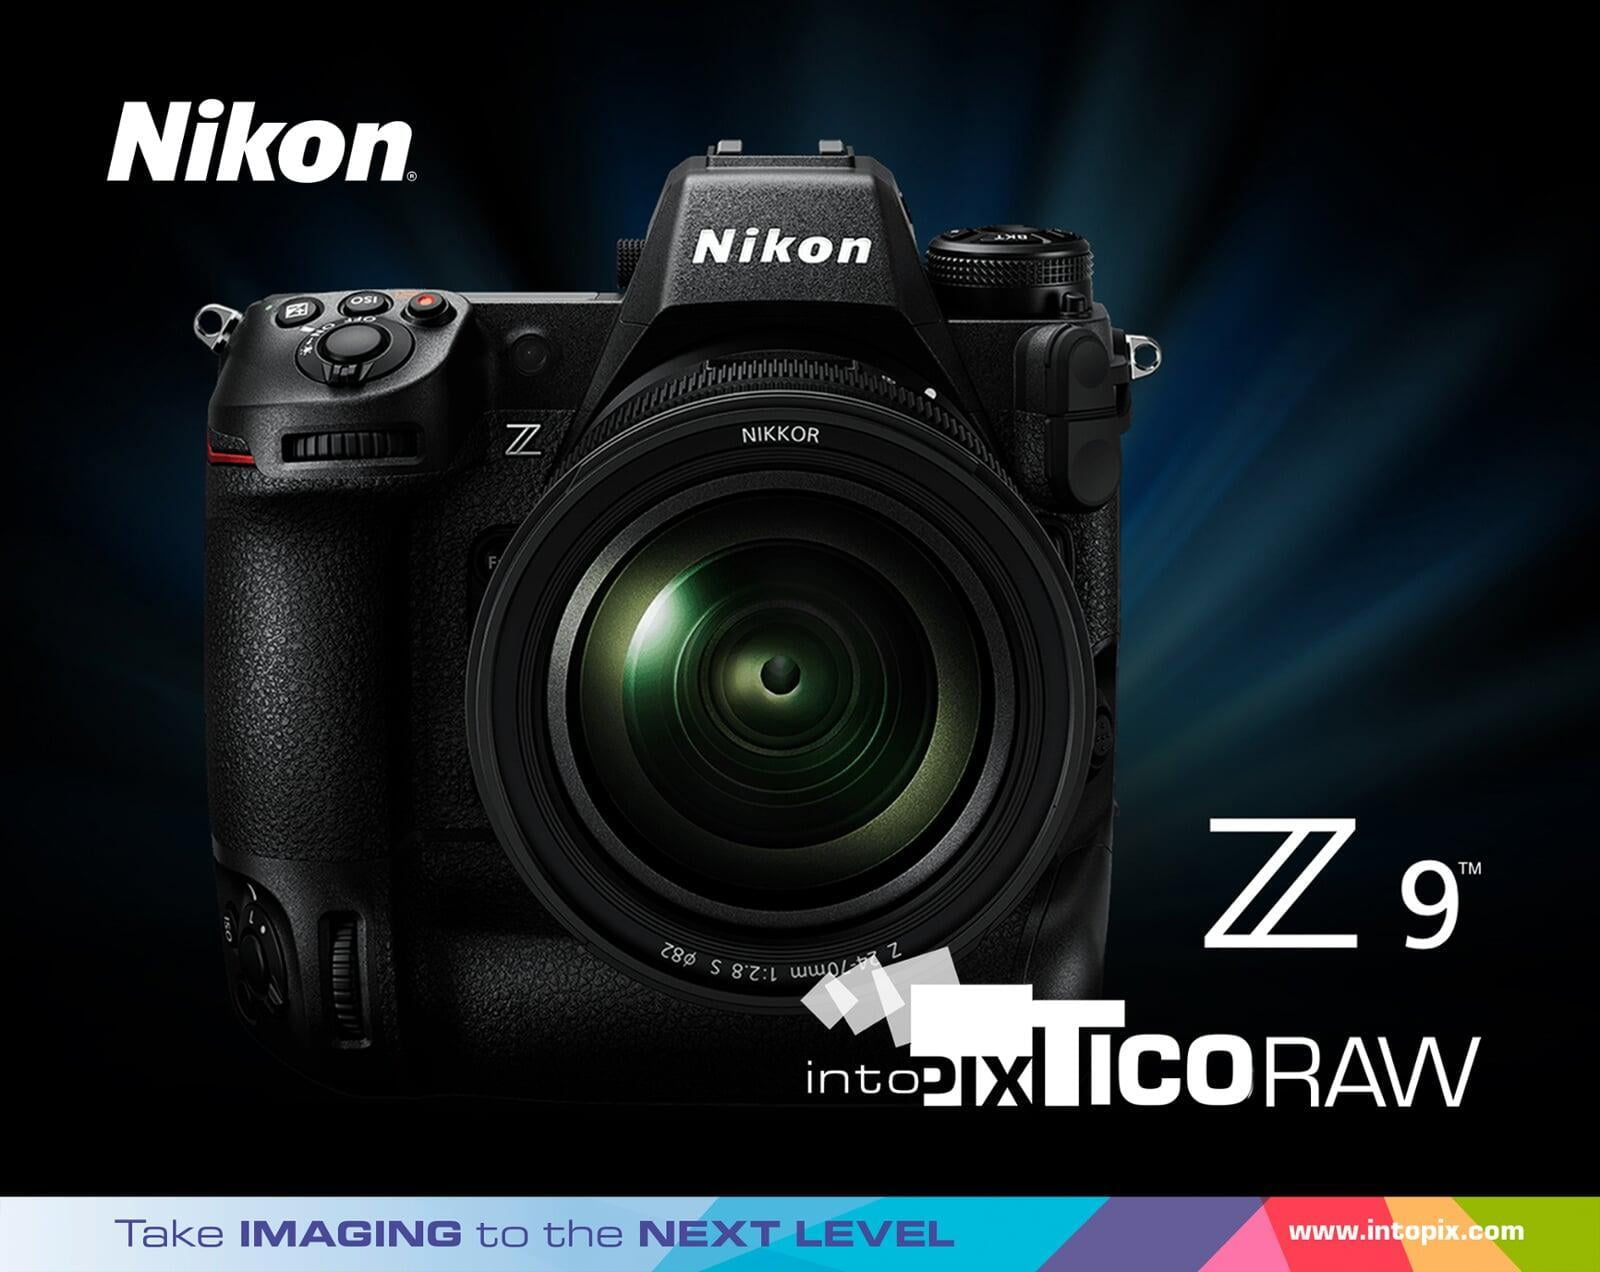 Utilisation de Nikon Z9 et Nikon N-RAW  intoPIX TicoRAW